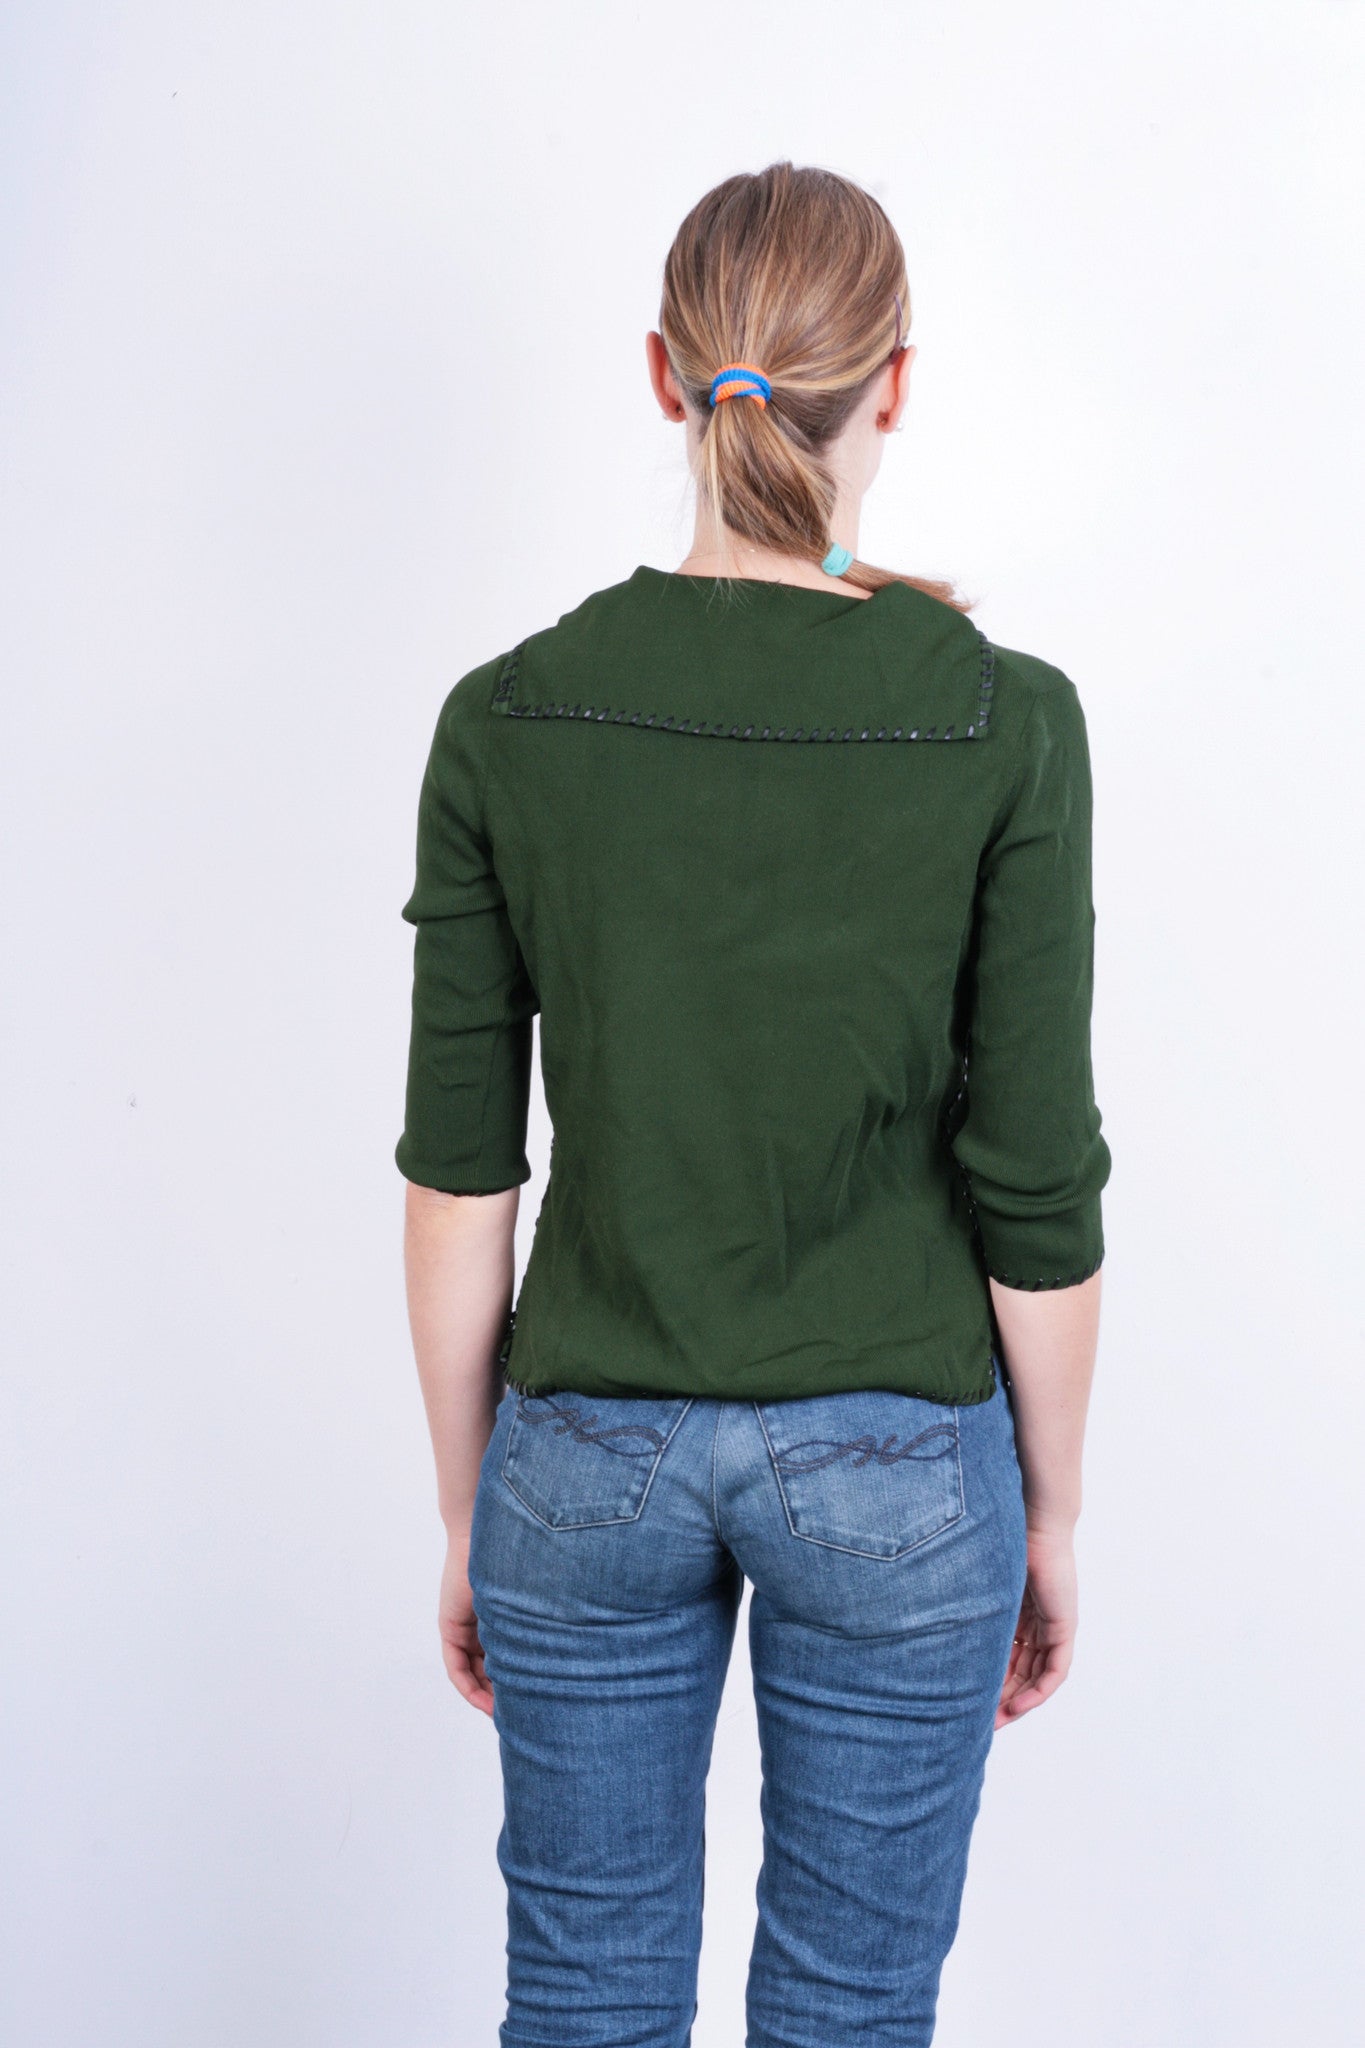 Grace Dane Lewis Womens S Jumper Sweater V Neck Green Vintage - RetrospectClothes